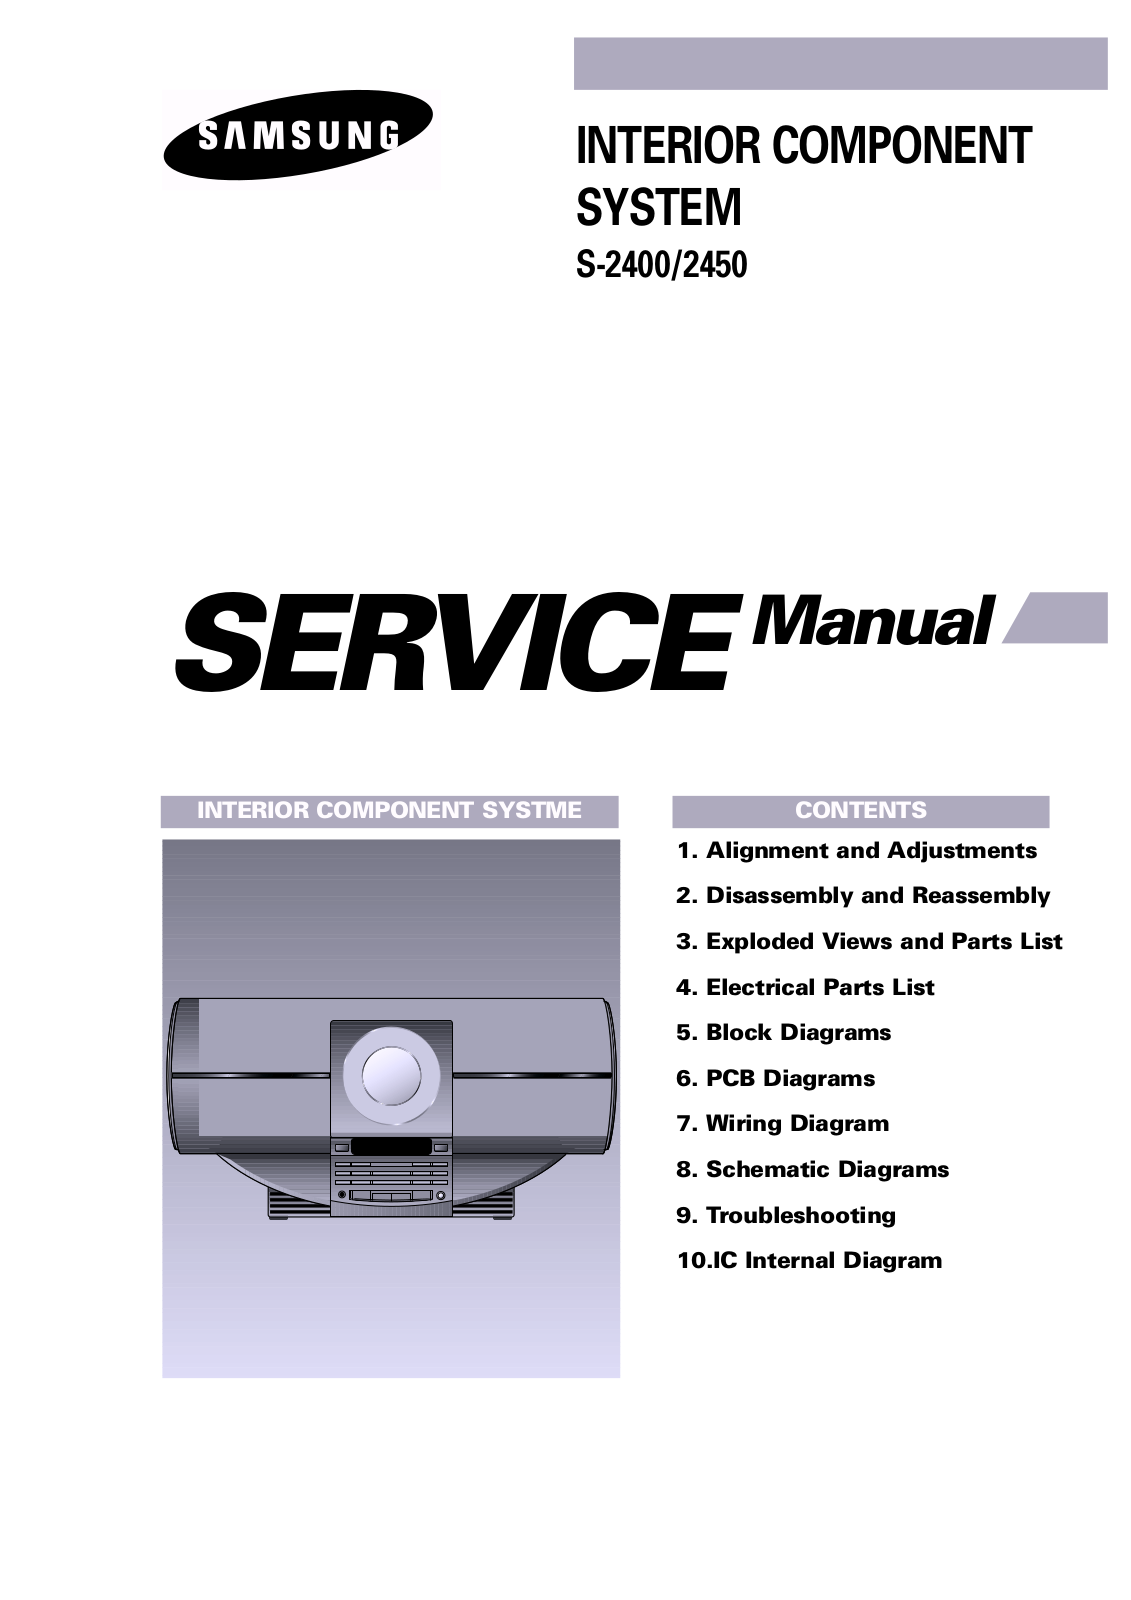 Samsung S-2450, S-2400 Service manual